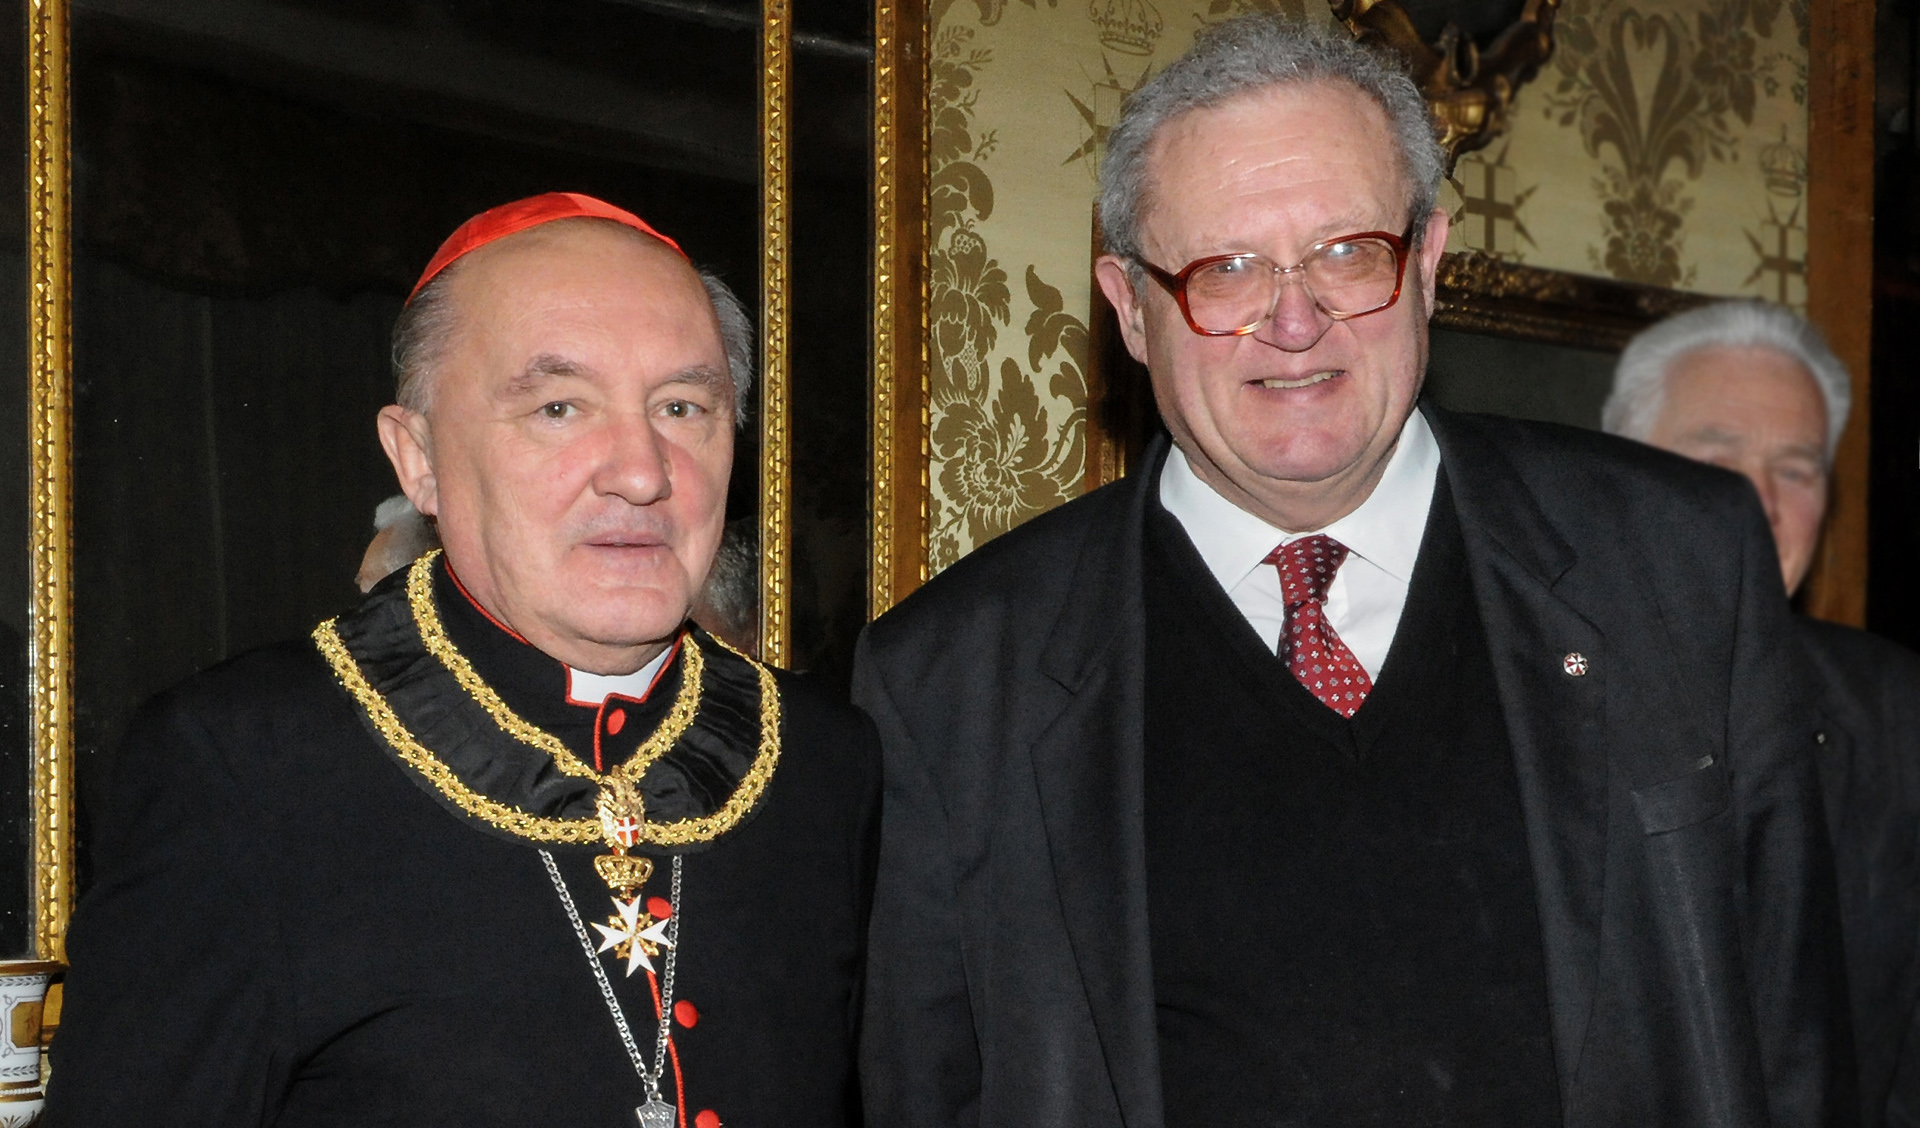 Cardinal Nycz, Archbishop of Warsaw, Bailiff of the Order of Malta